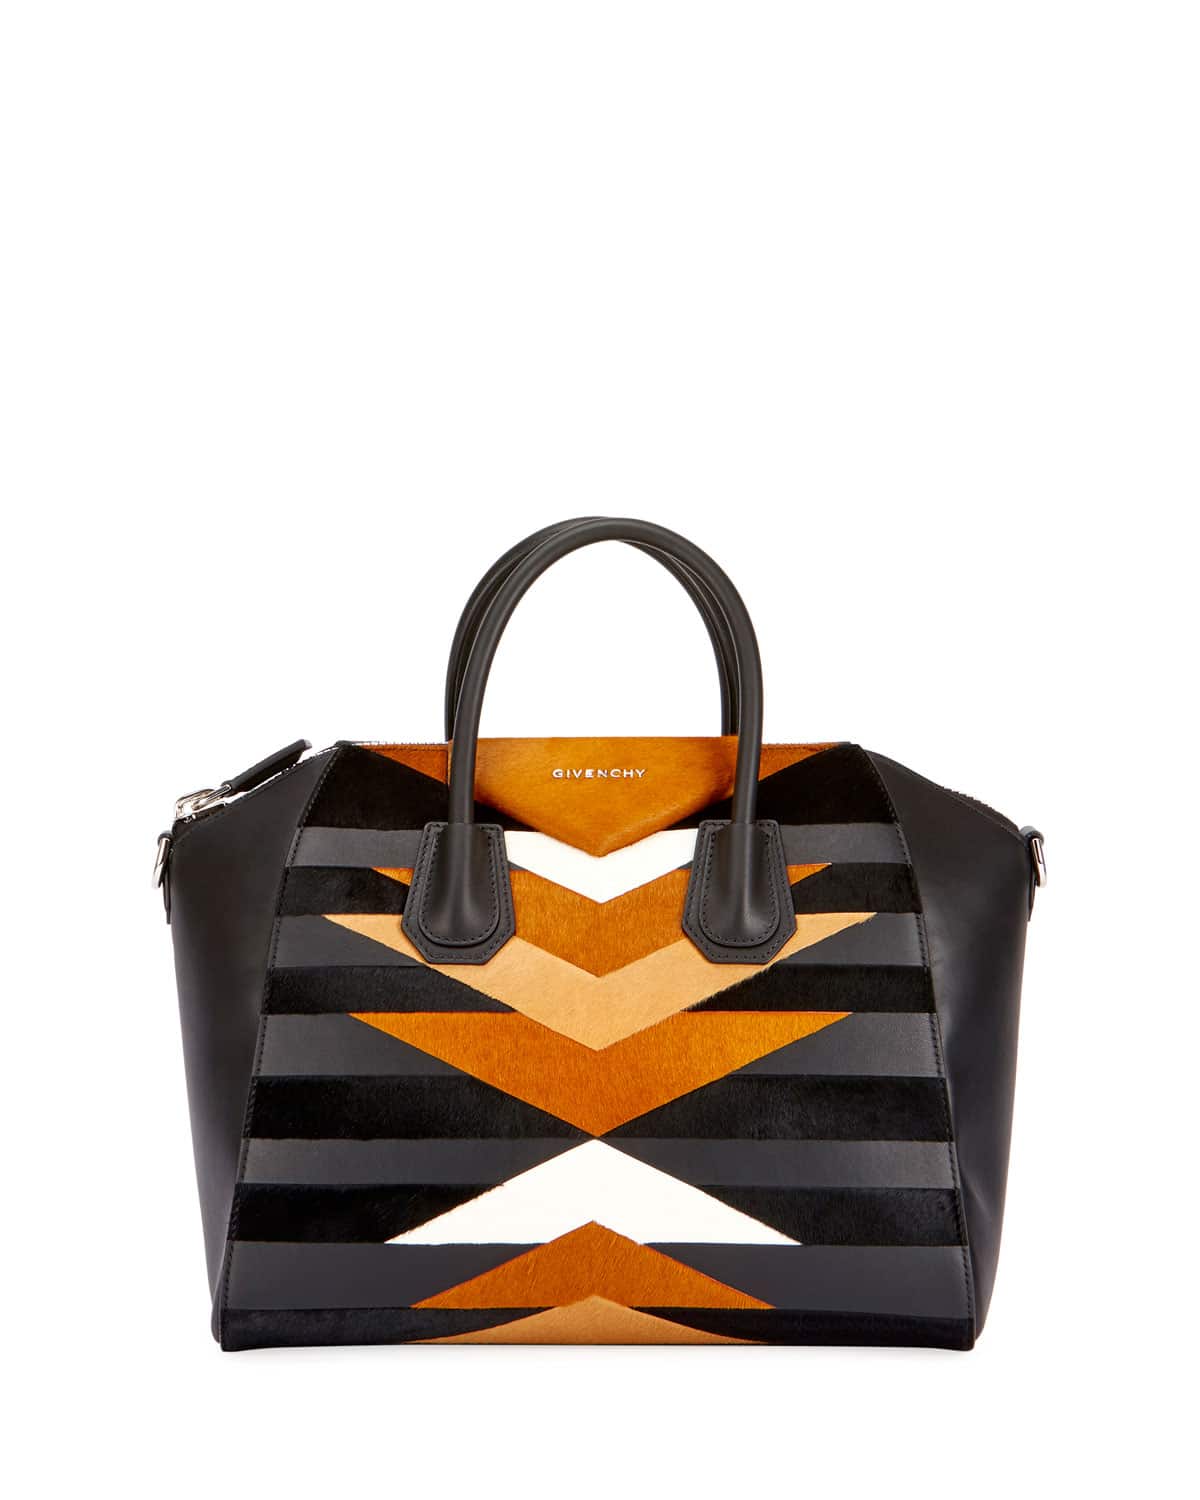 Givenchy Antigona Bags for Women - Up to 33% off